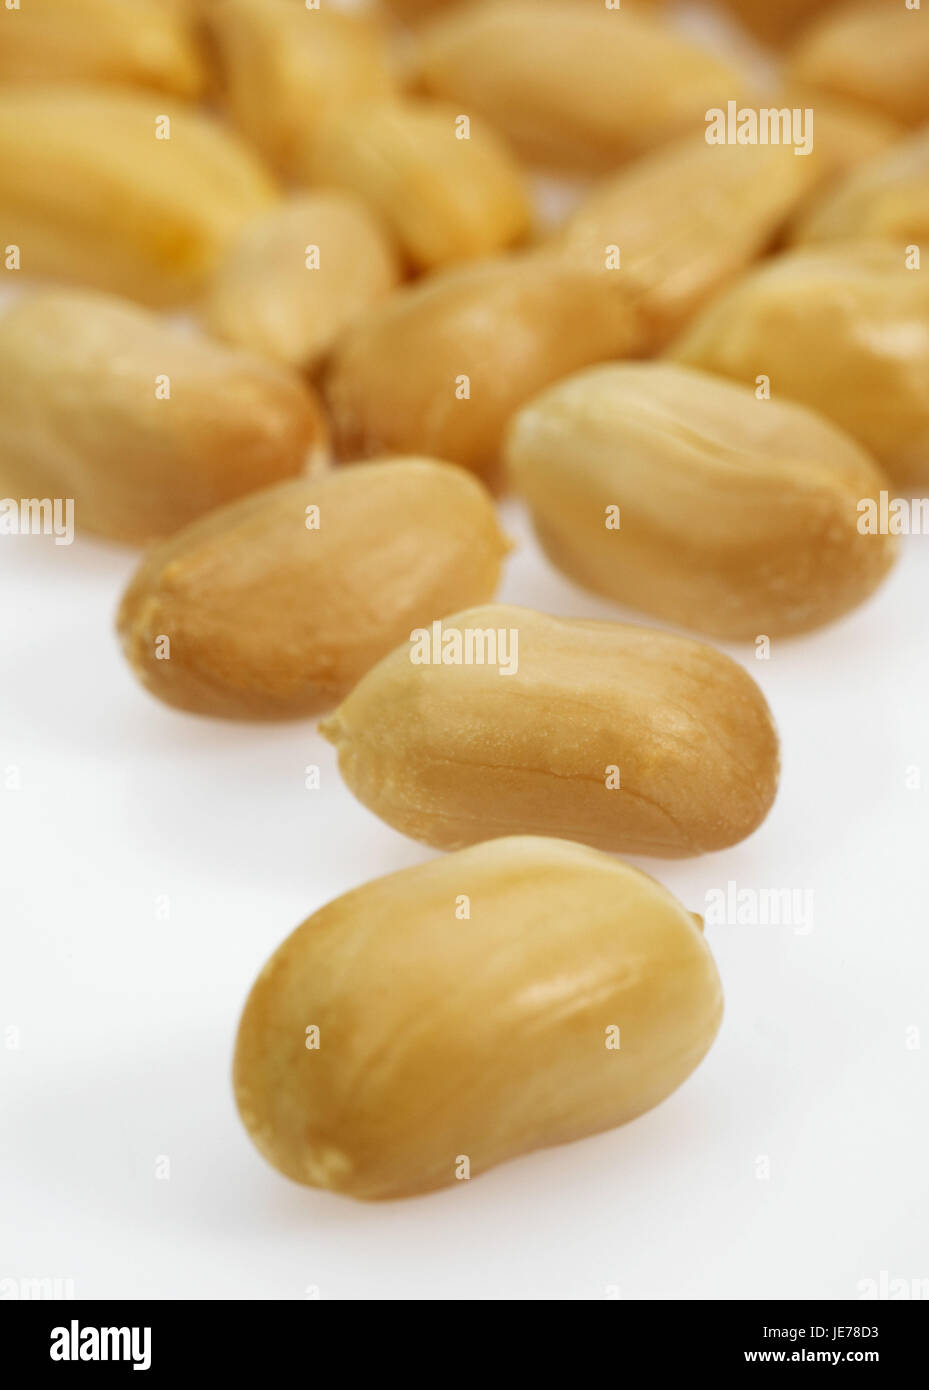 Peanuts, Arachis hypogaea, white background, Stock Photo